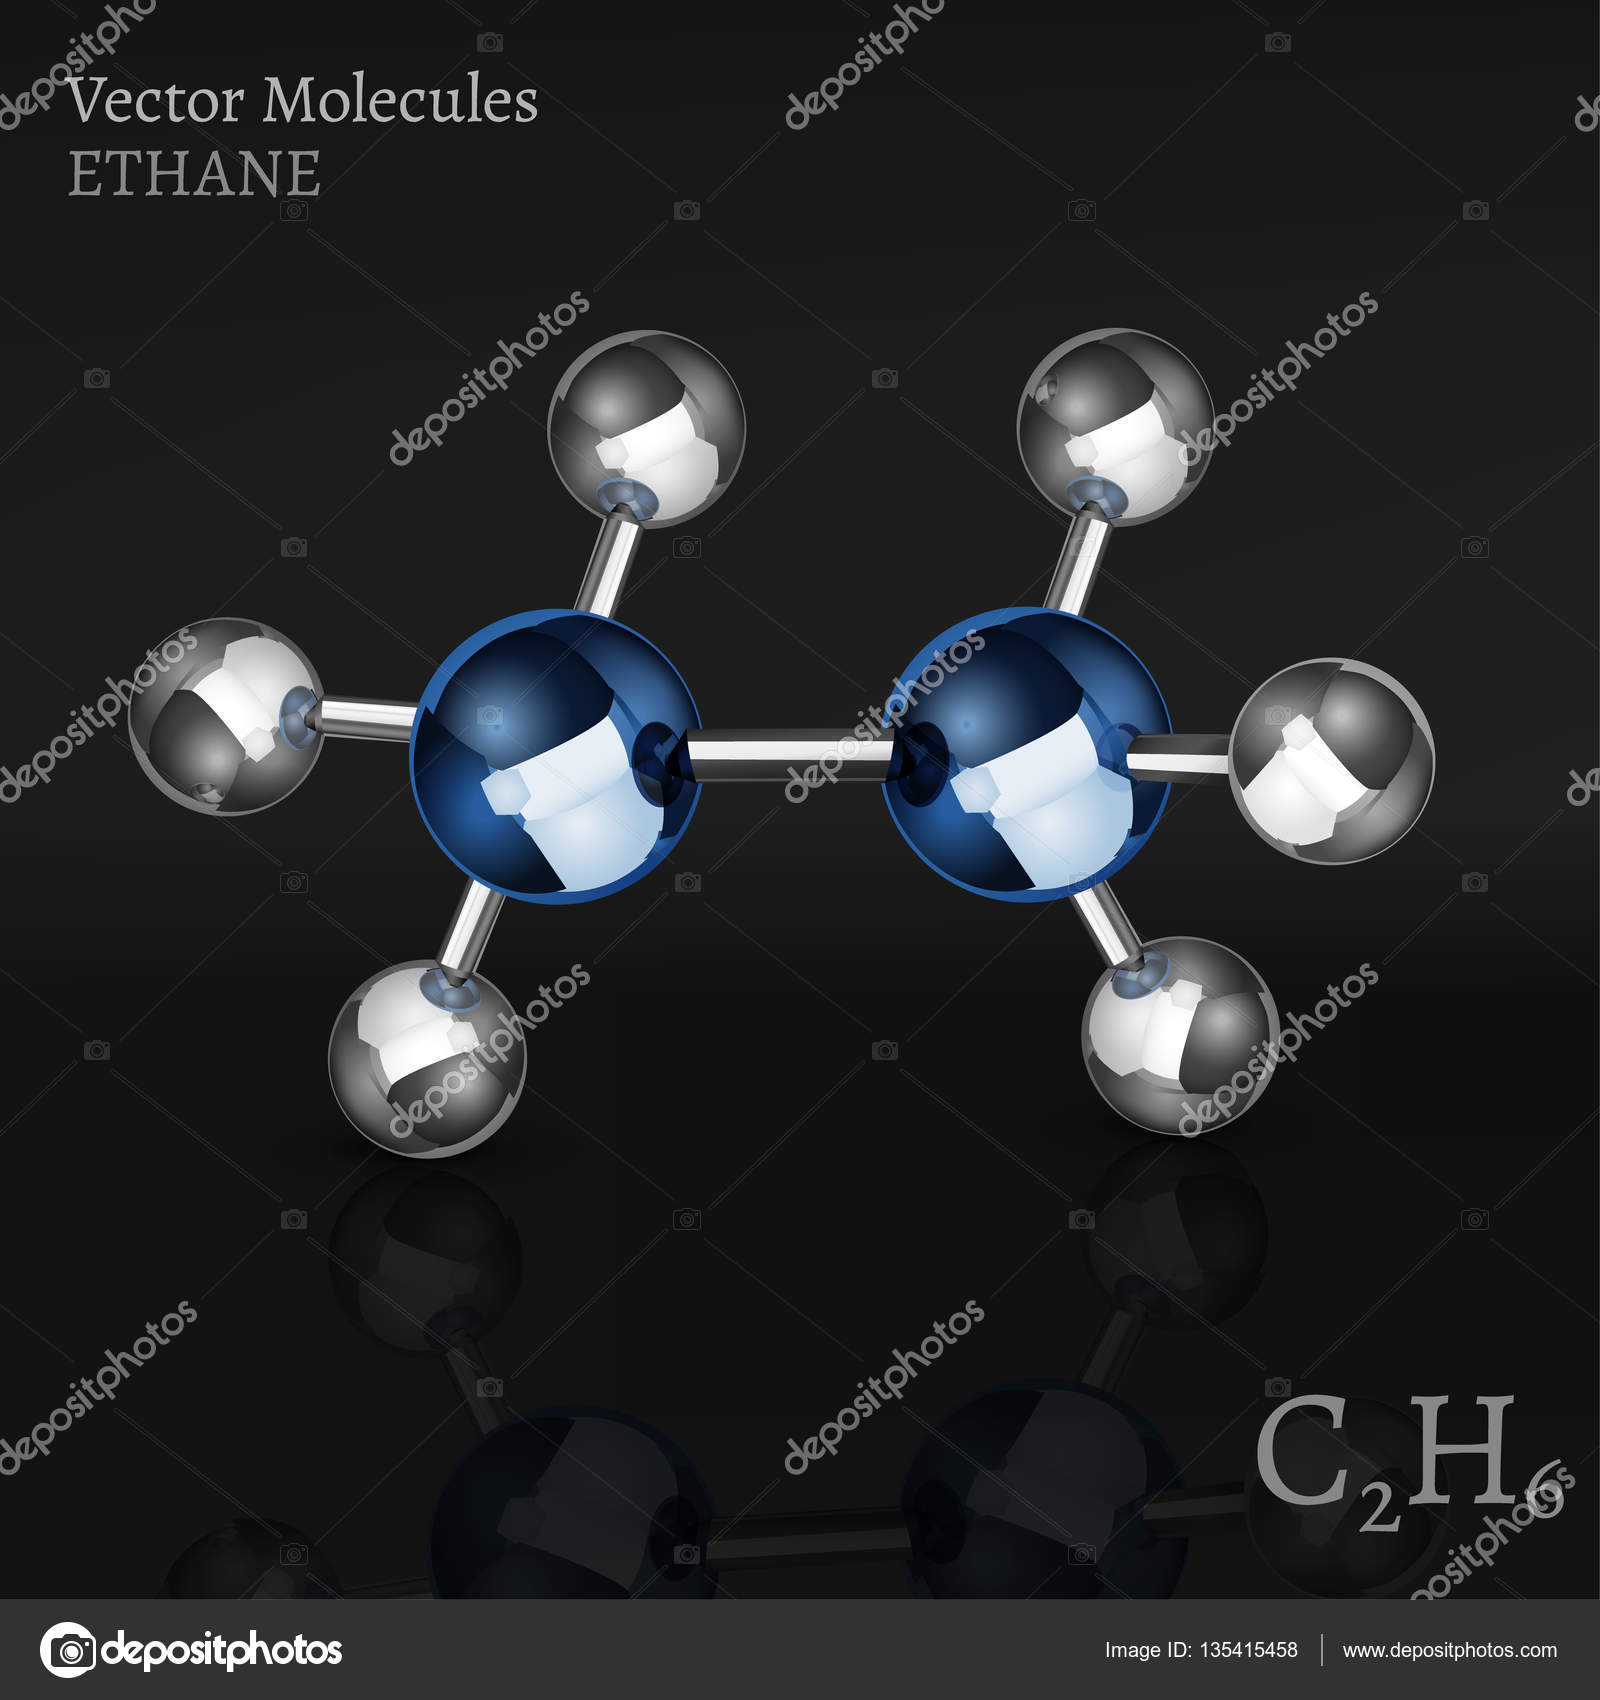 #135415458 Vector Molecule \u2014 Stock Image annyart Ethane ©